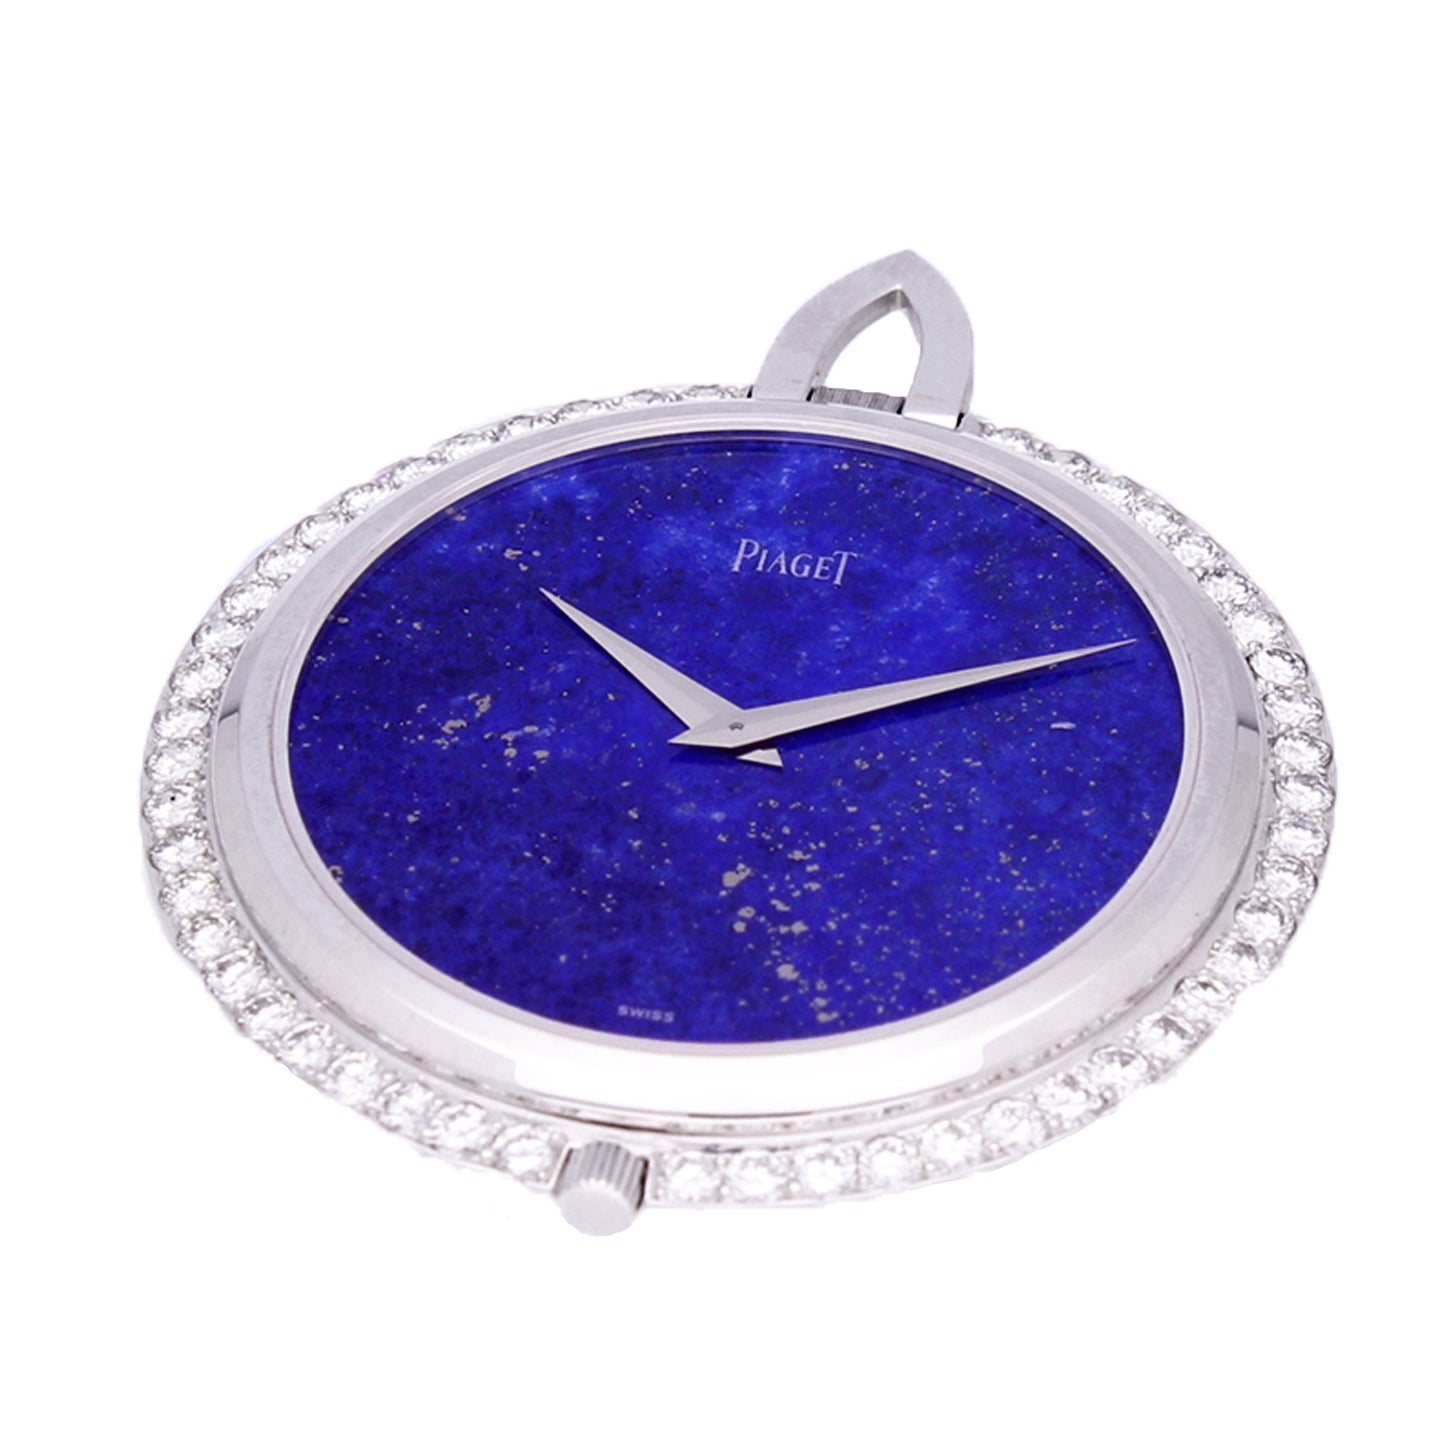 18ct white gold Piaget pocket watch with Lapis Lazuli dial & diamond set bezel. Made 1969